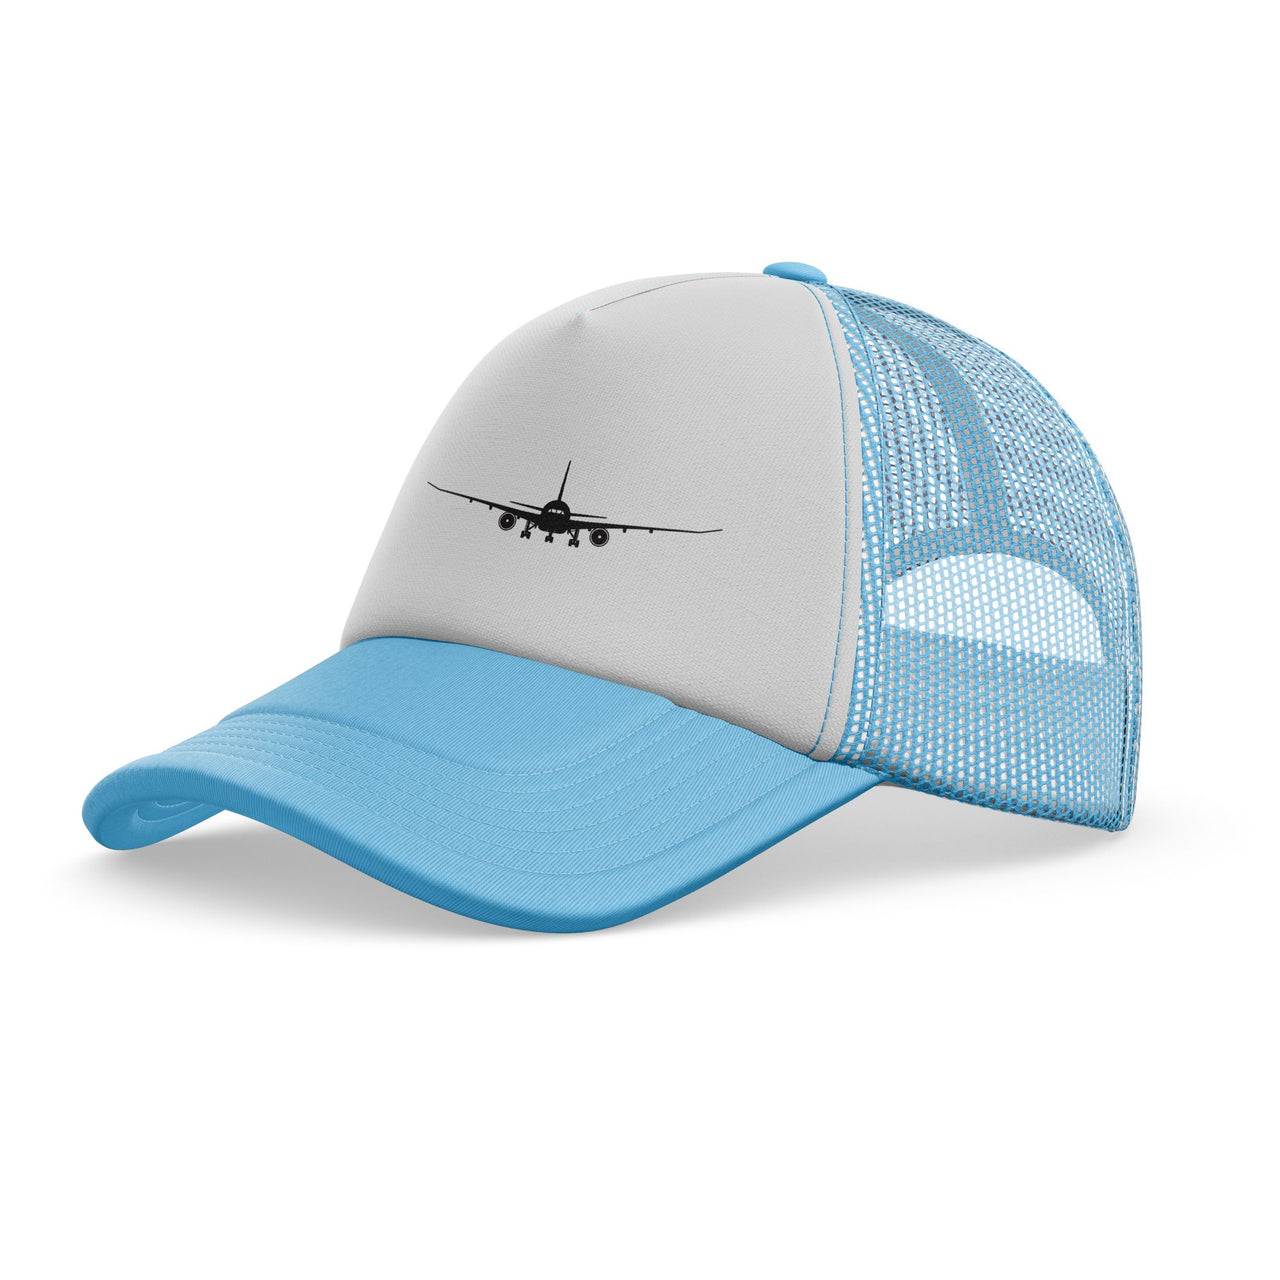 Boeing 787 Silhouette Designed Trucker Caps & Hats